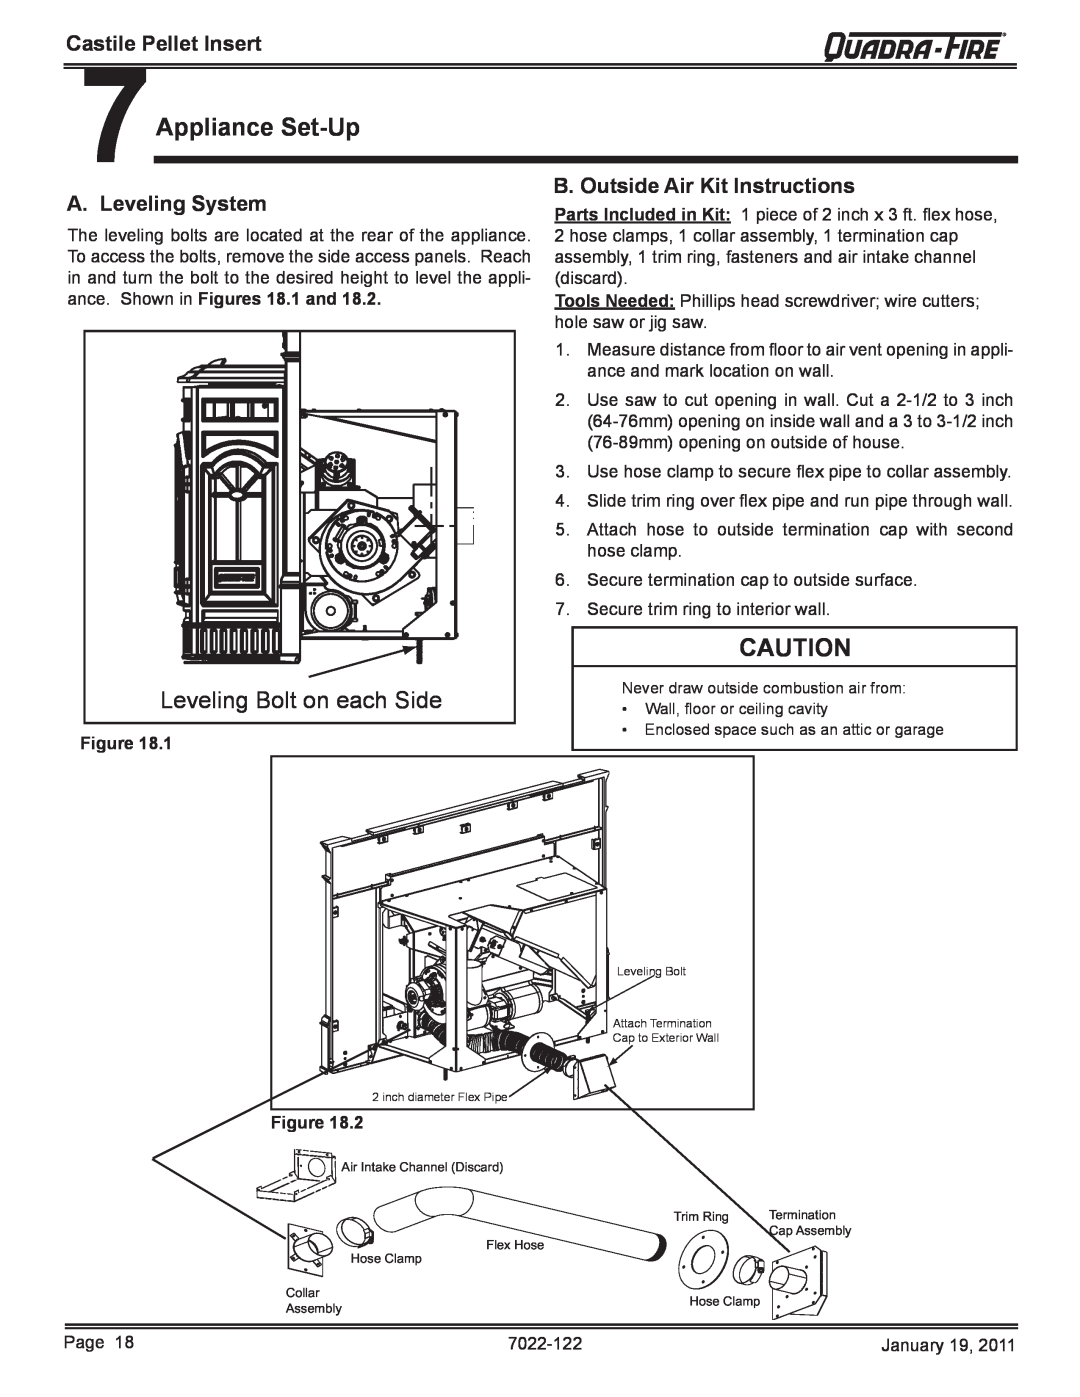 Quadra-Fire CASTILEI-MBK 7Appliance Set-Up, B. Outside Air Kit Instructions, A. Leveling System, Castile Pellet Insert 